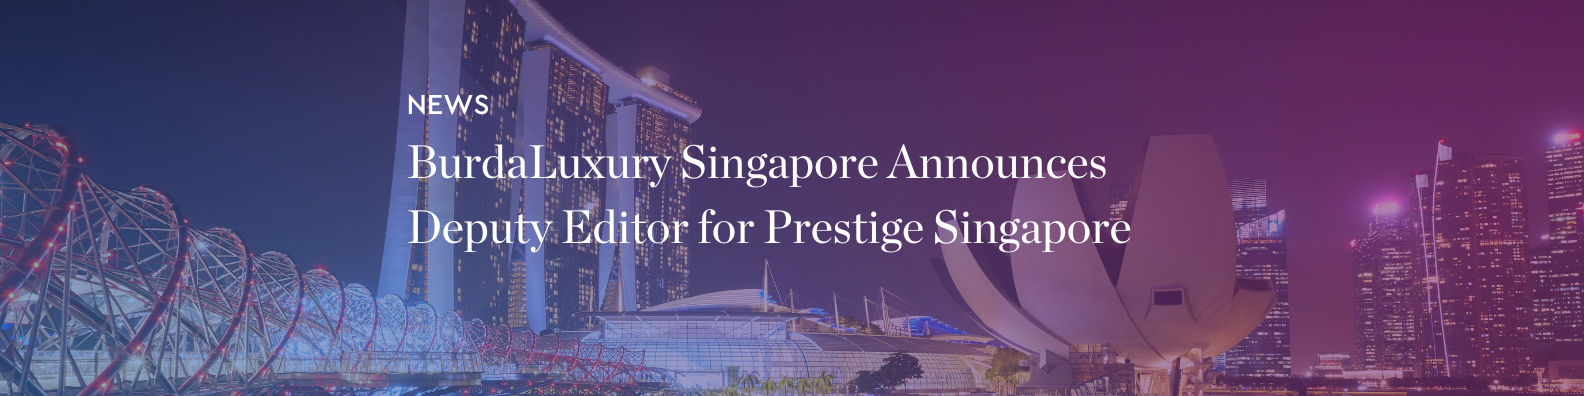 BurdaLuxury Singapore Announces Deputy Editor